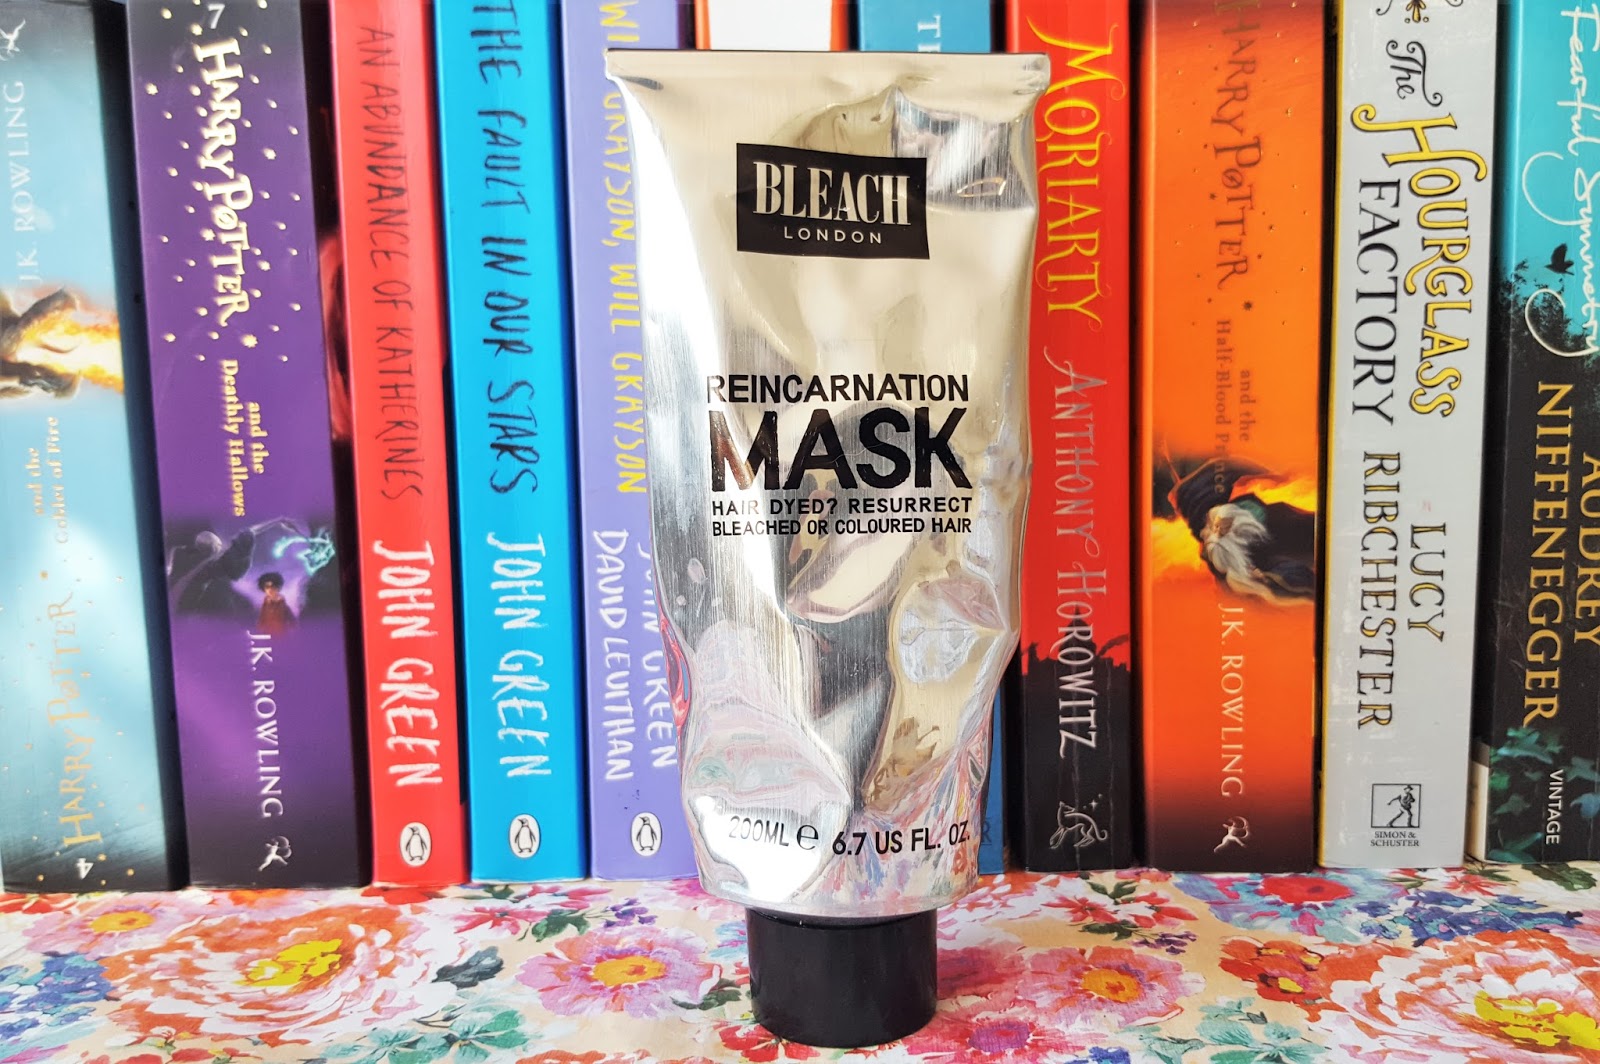 Bleach London Reincarnation Mask - wide 6